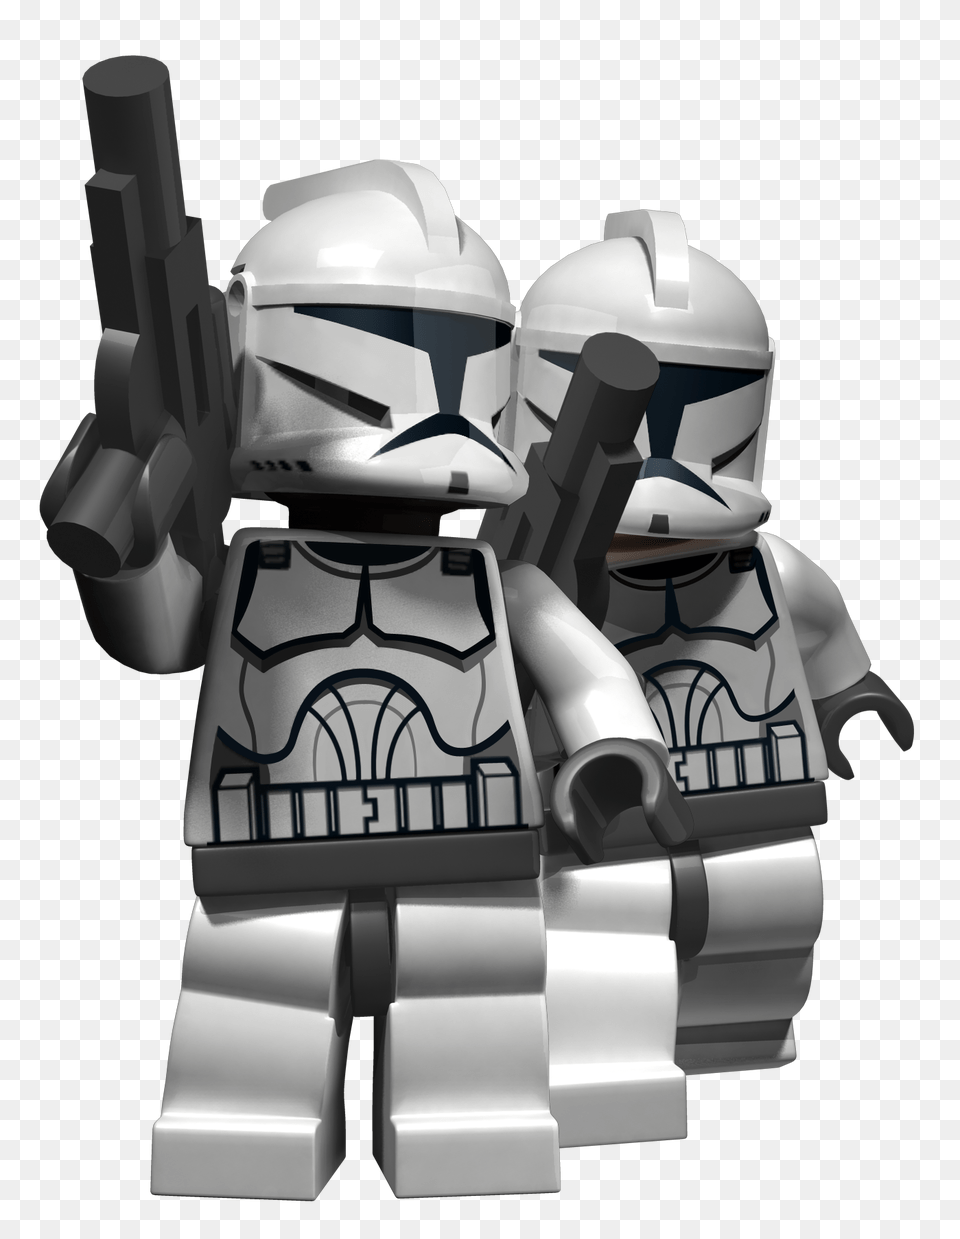 Star Wars Purepng Free Transparent Cc0 Lego Star Wars Clone Troopers, Armor, Bulldozer, Machine Png Image